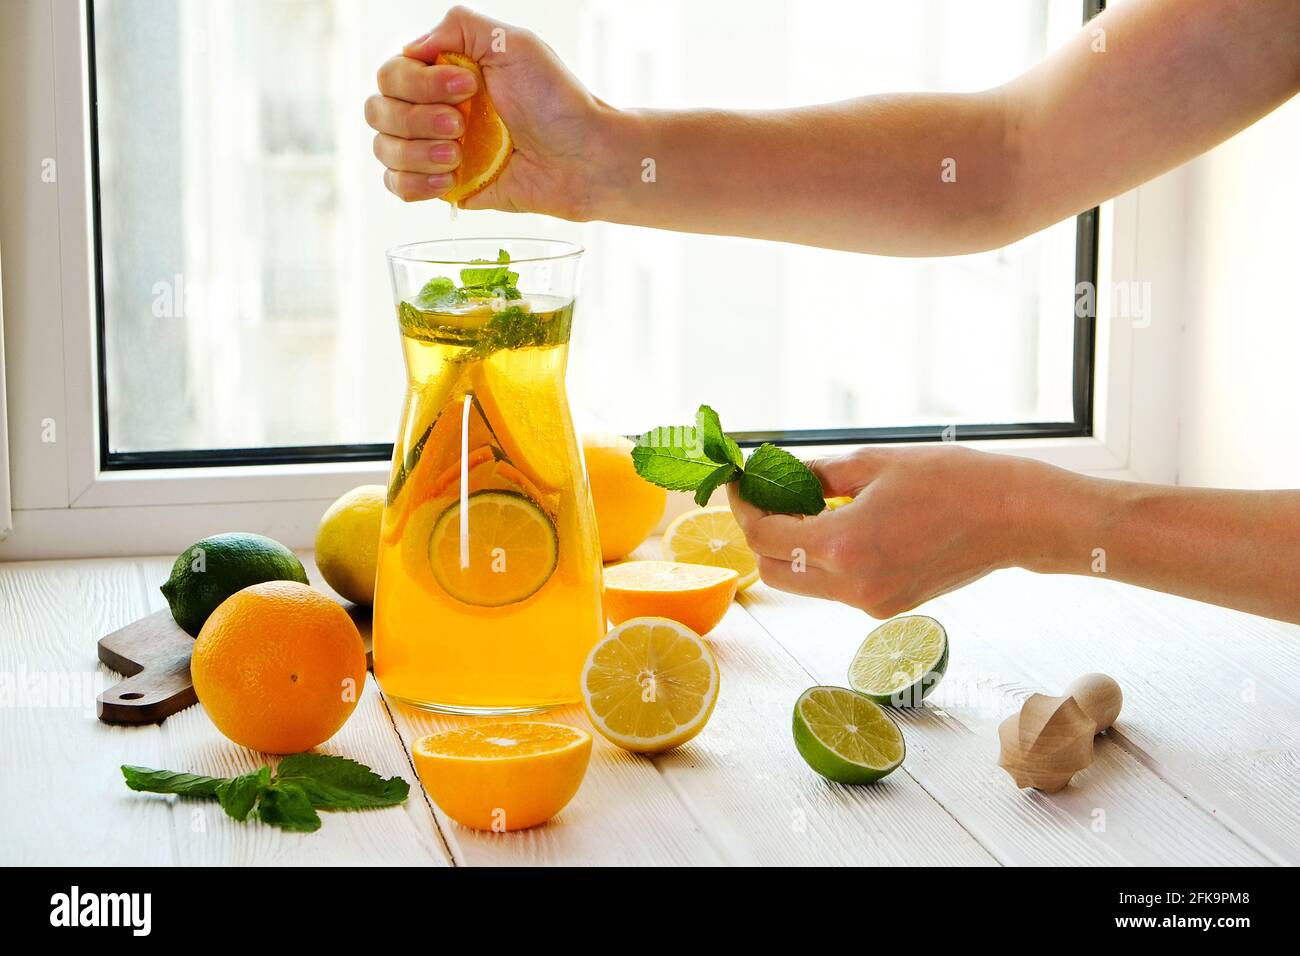 https://c8.alamy.com/compes/2fk9pm8/primer-plano-de-las-manos-de-la-mujer-joven-haciendo-limonada-fresca-exprimiendo-el-jugo-de-citricos-exprimidor-jarra-llena-de-bebida-fria-con-limon-naranja-l-2fk9pm8.jpg